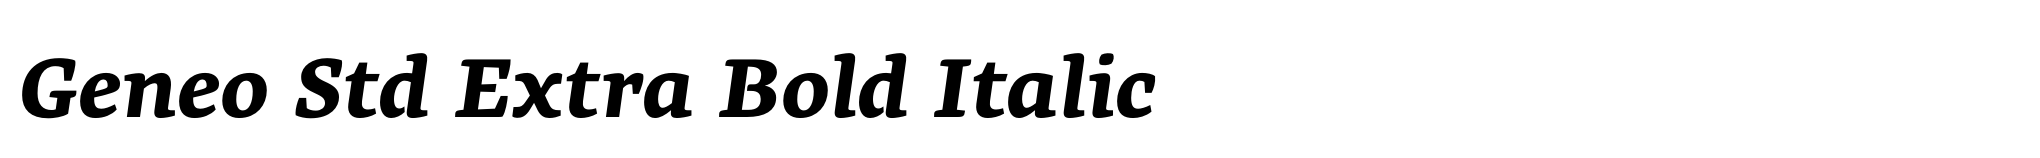 Geneo Std Extra Bold Italic image